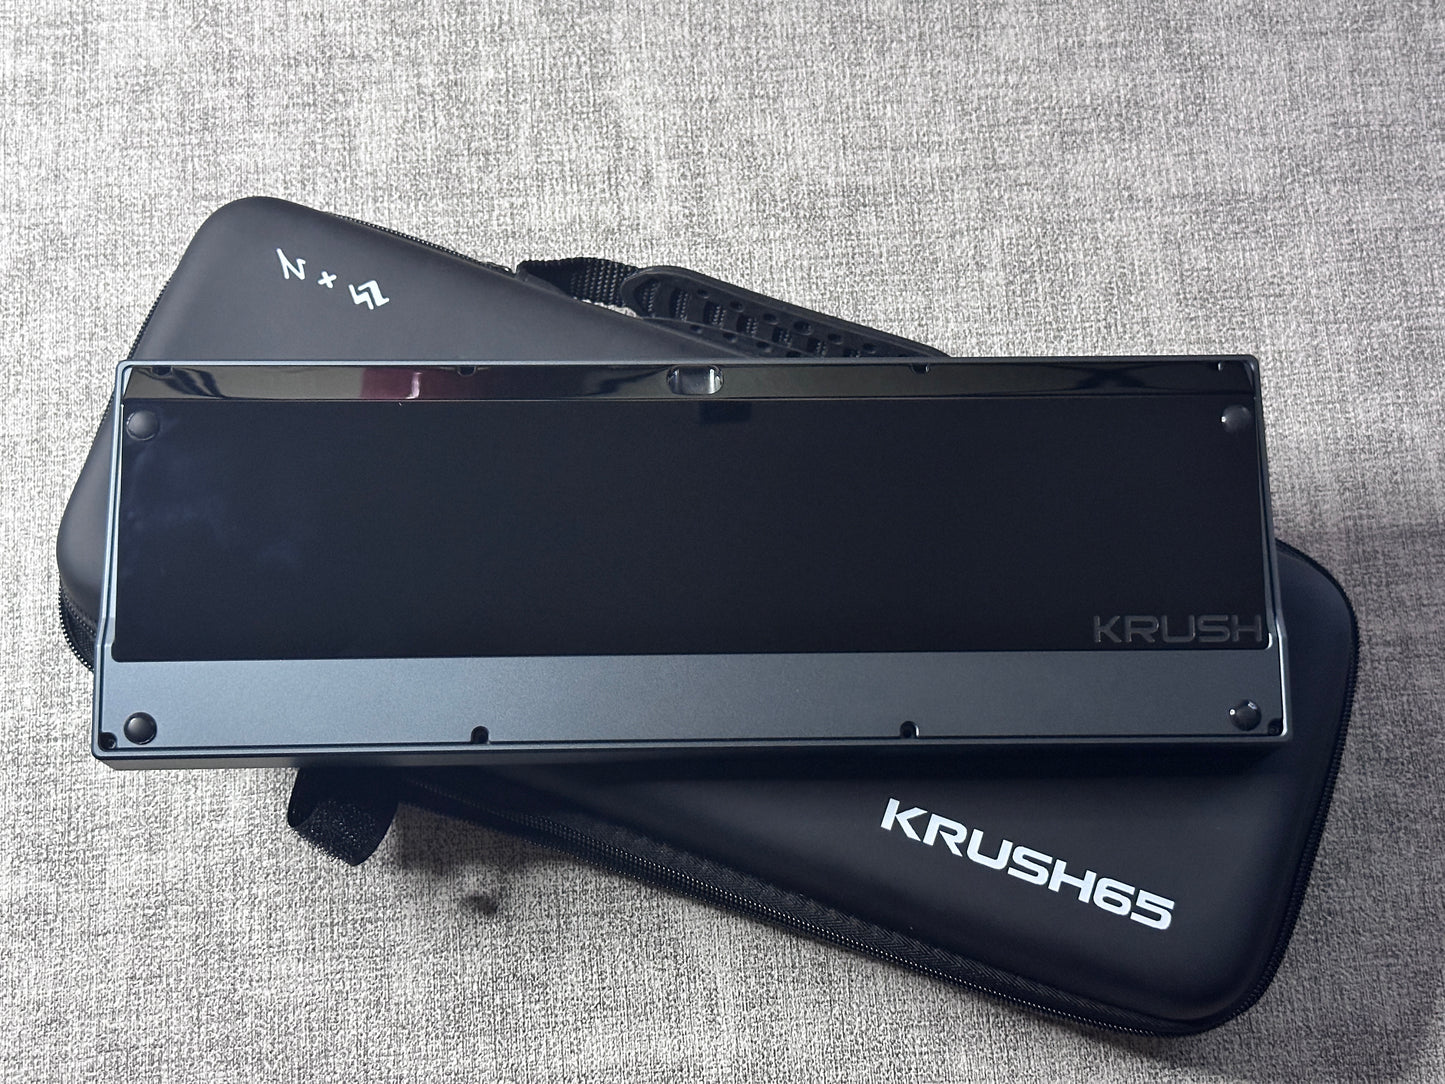 Krush65 [GB]